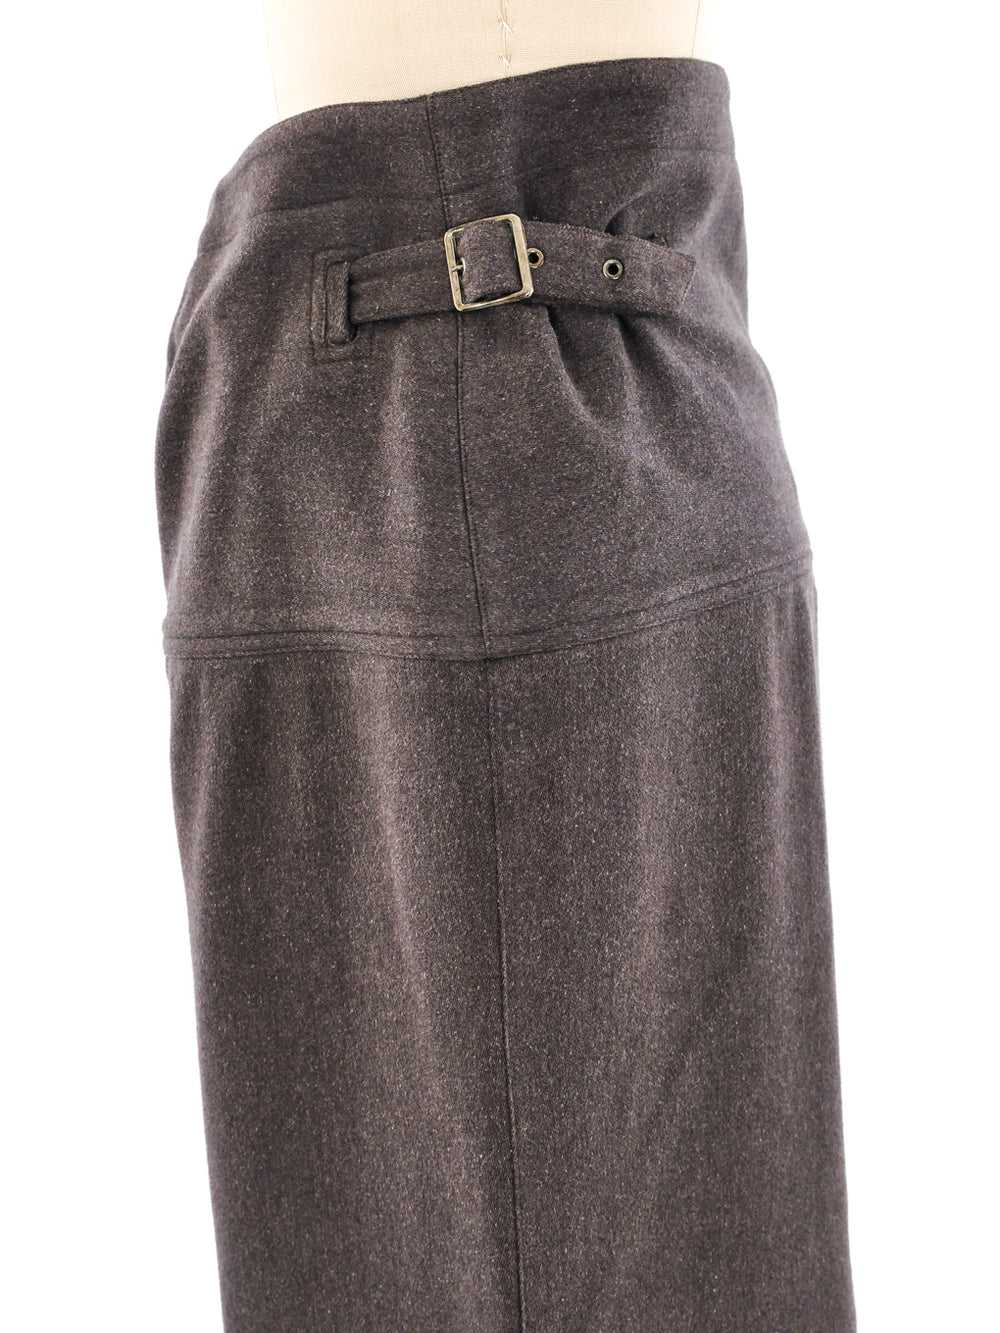 Issey Miyake Buckle Wrap Skirt - image 5